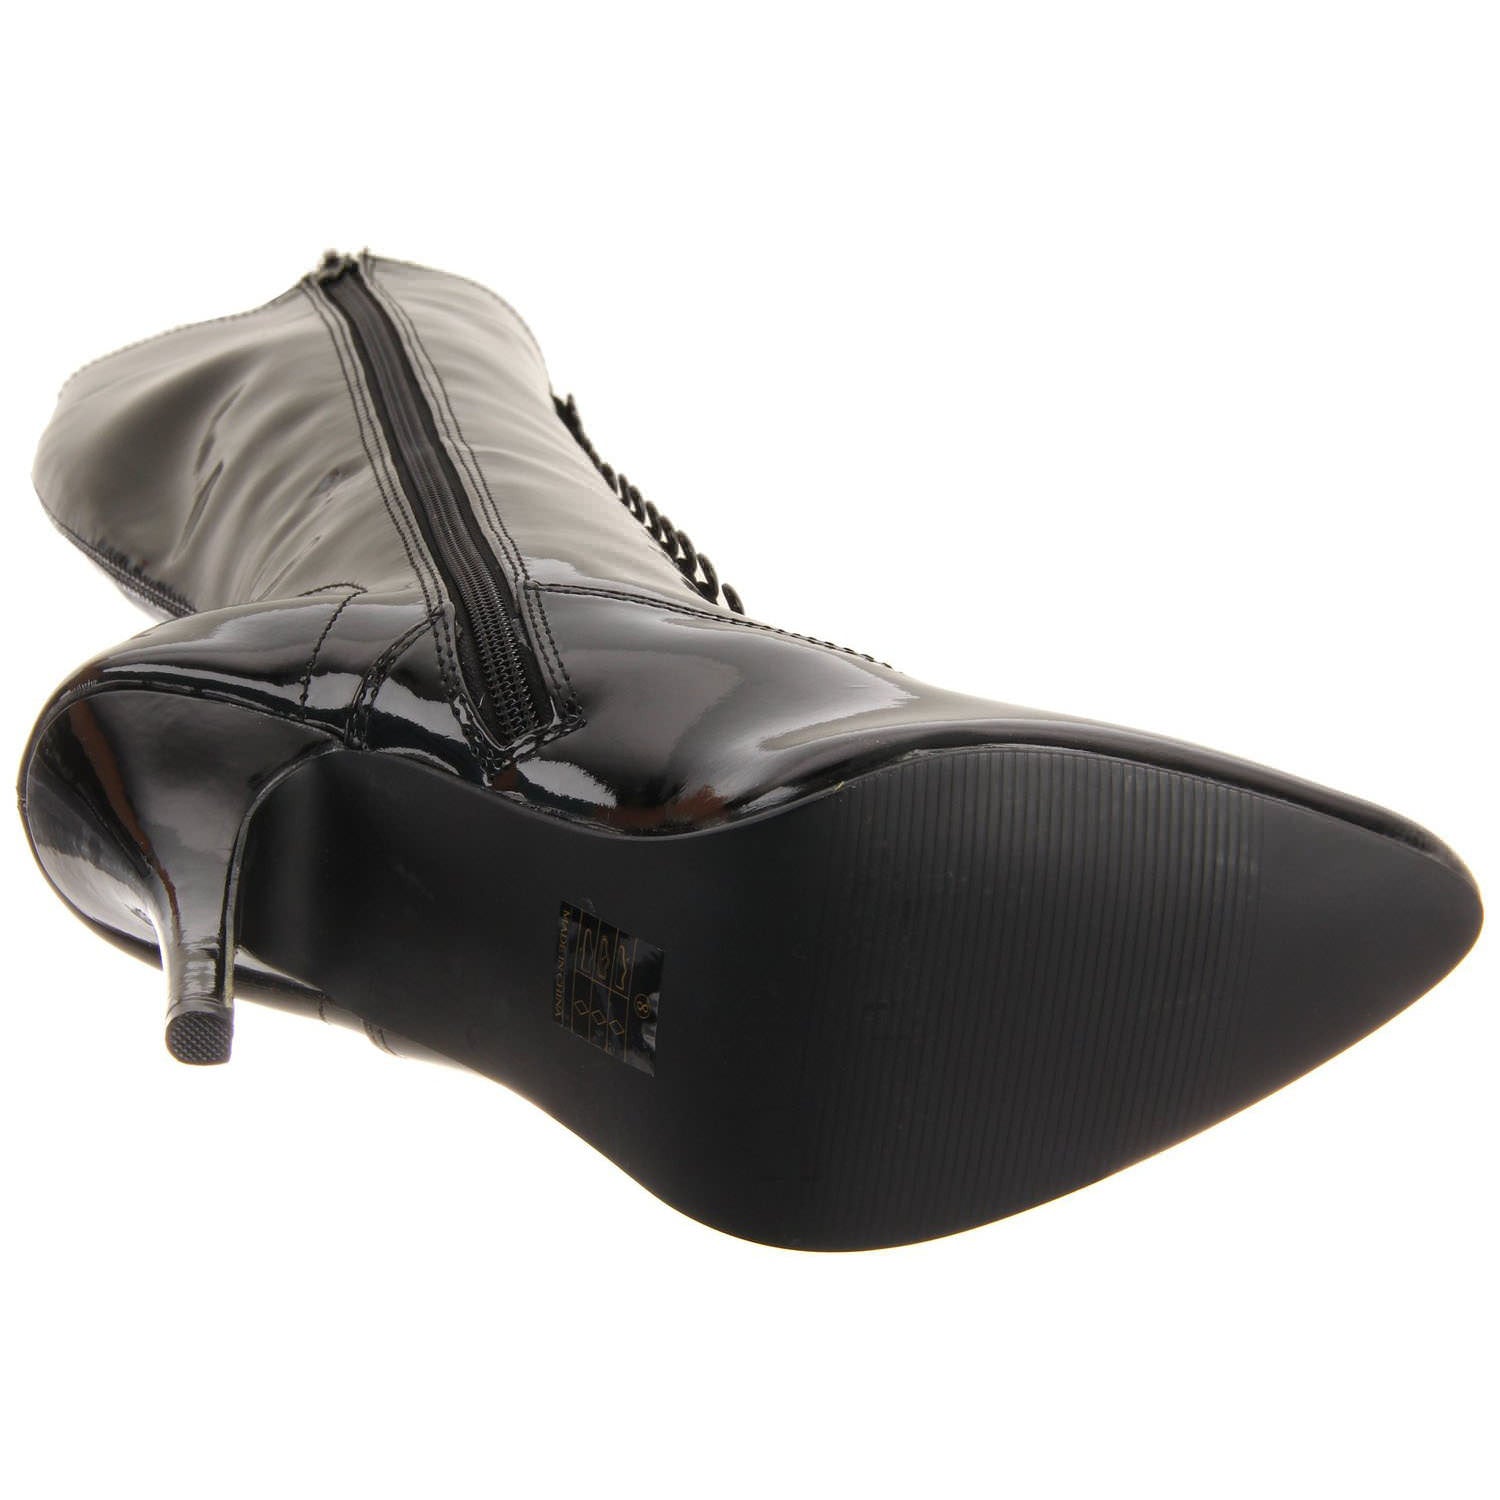 PLEASER SEDUCE-2020 Black Pat Knee High Boots - Shoecup.com - 7